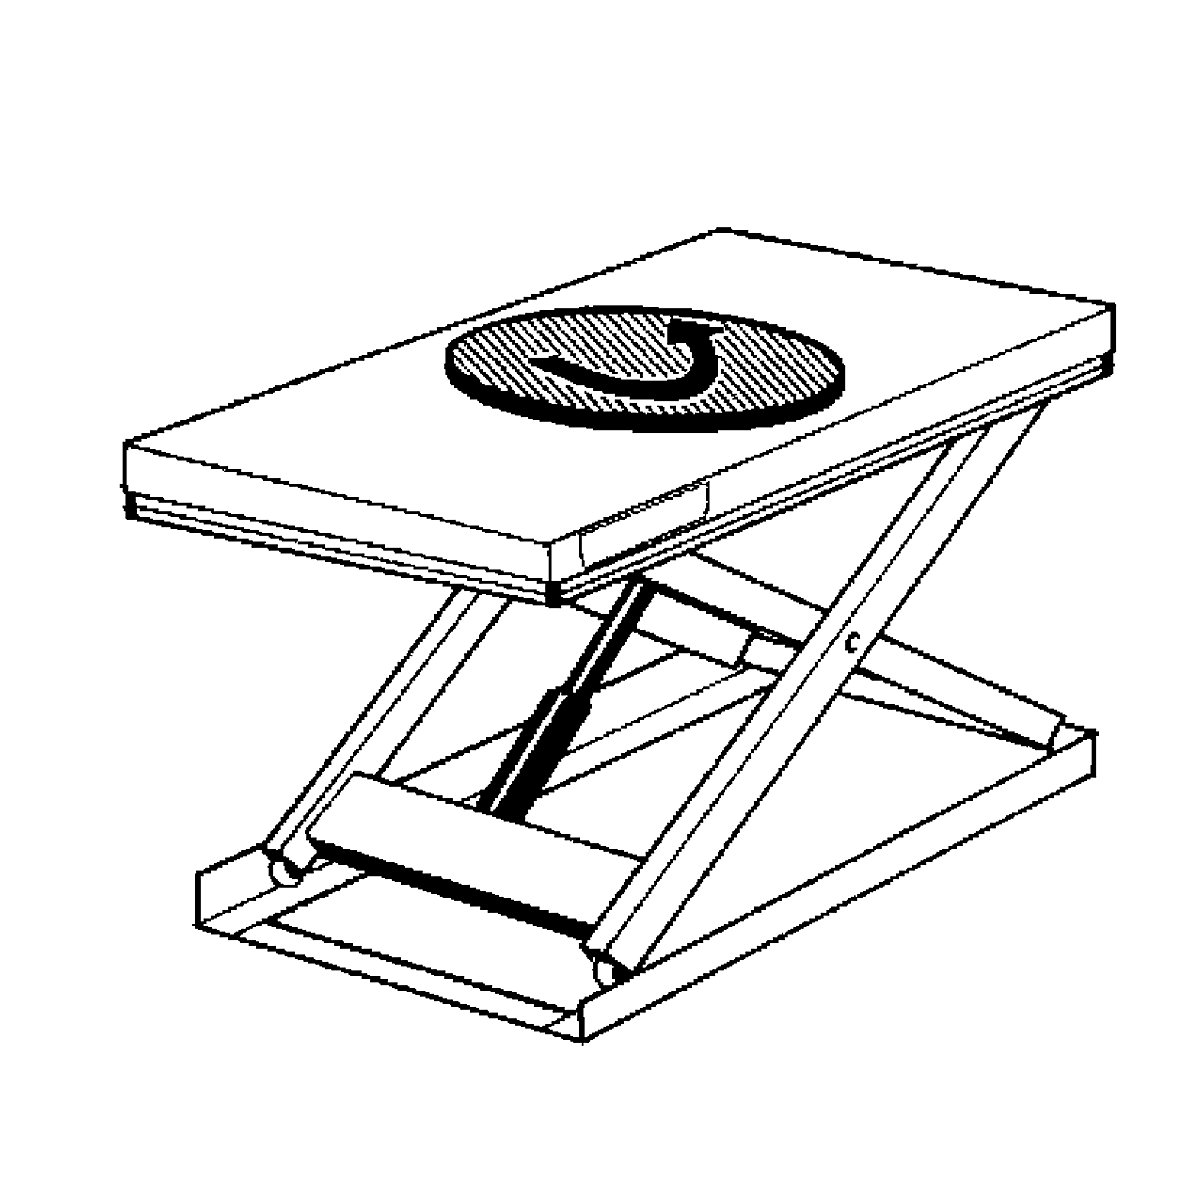 Kompaktna dvižna miza – Edmolift (Slika izdelka 14)-13